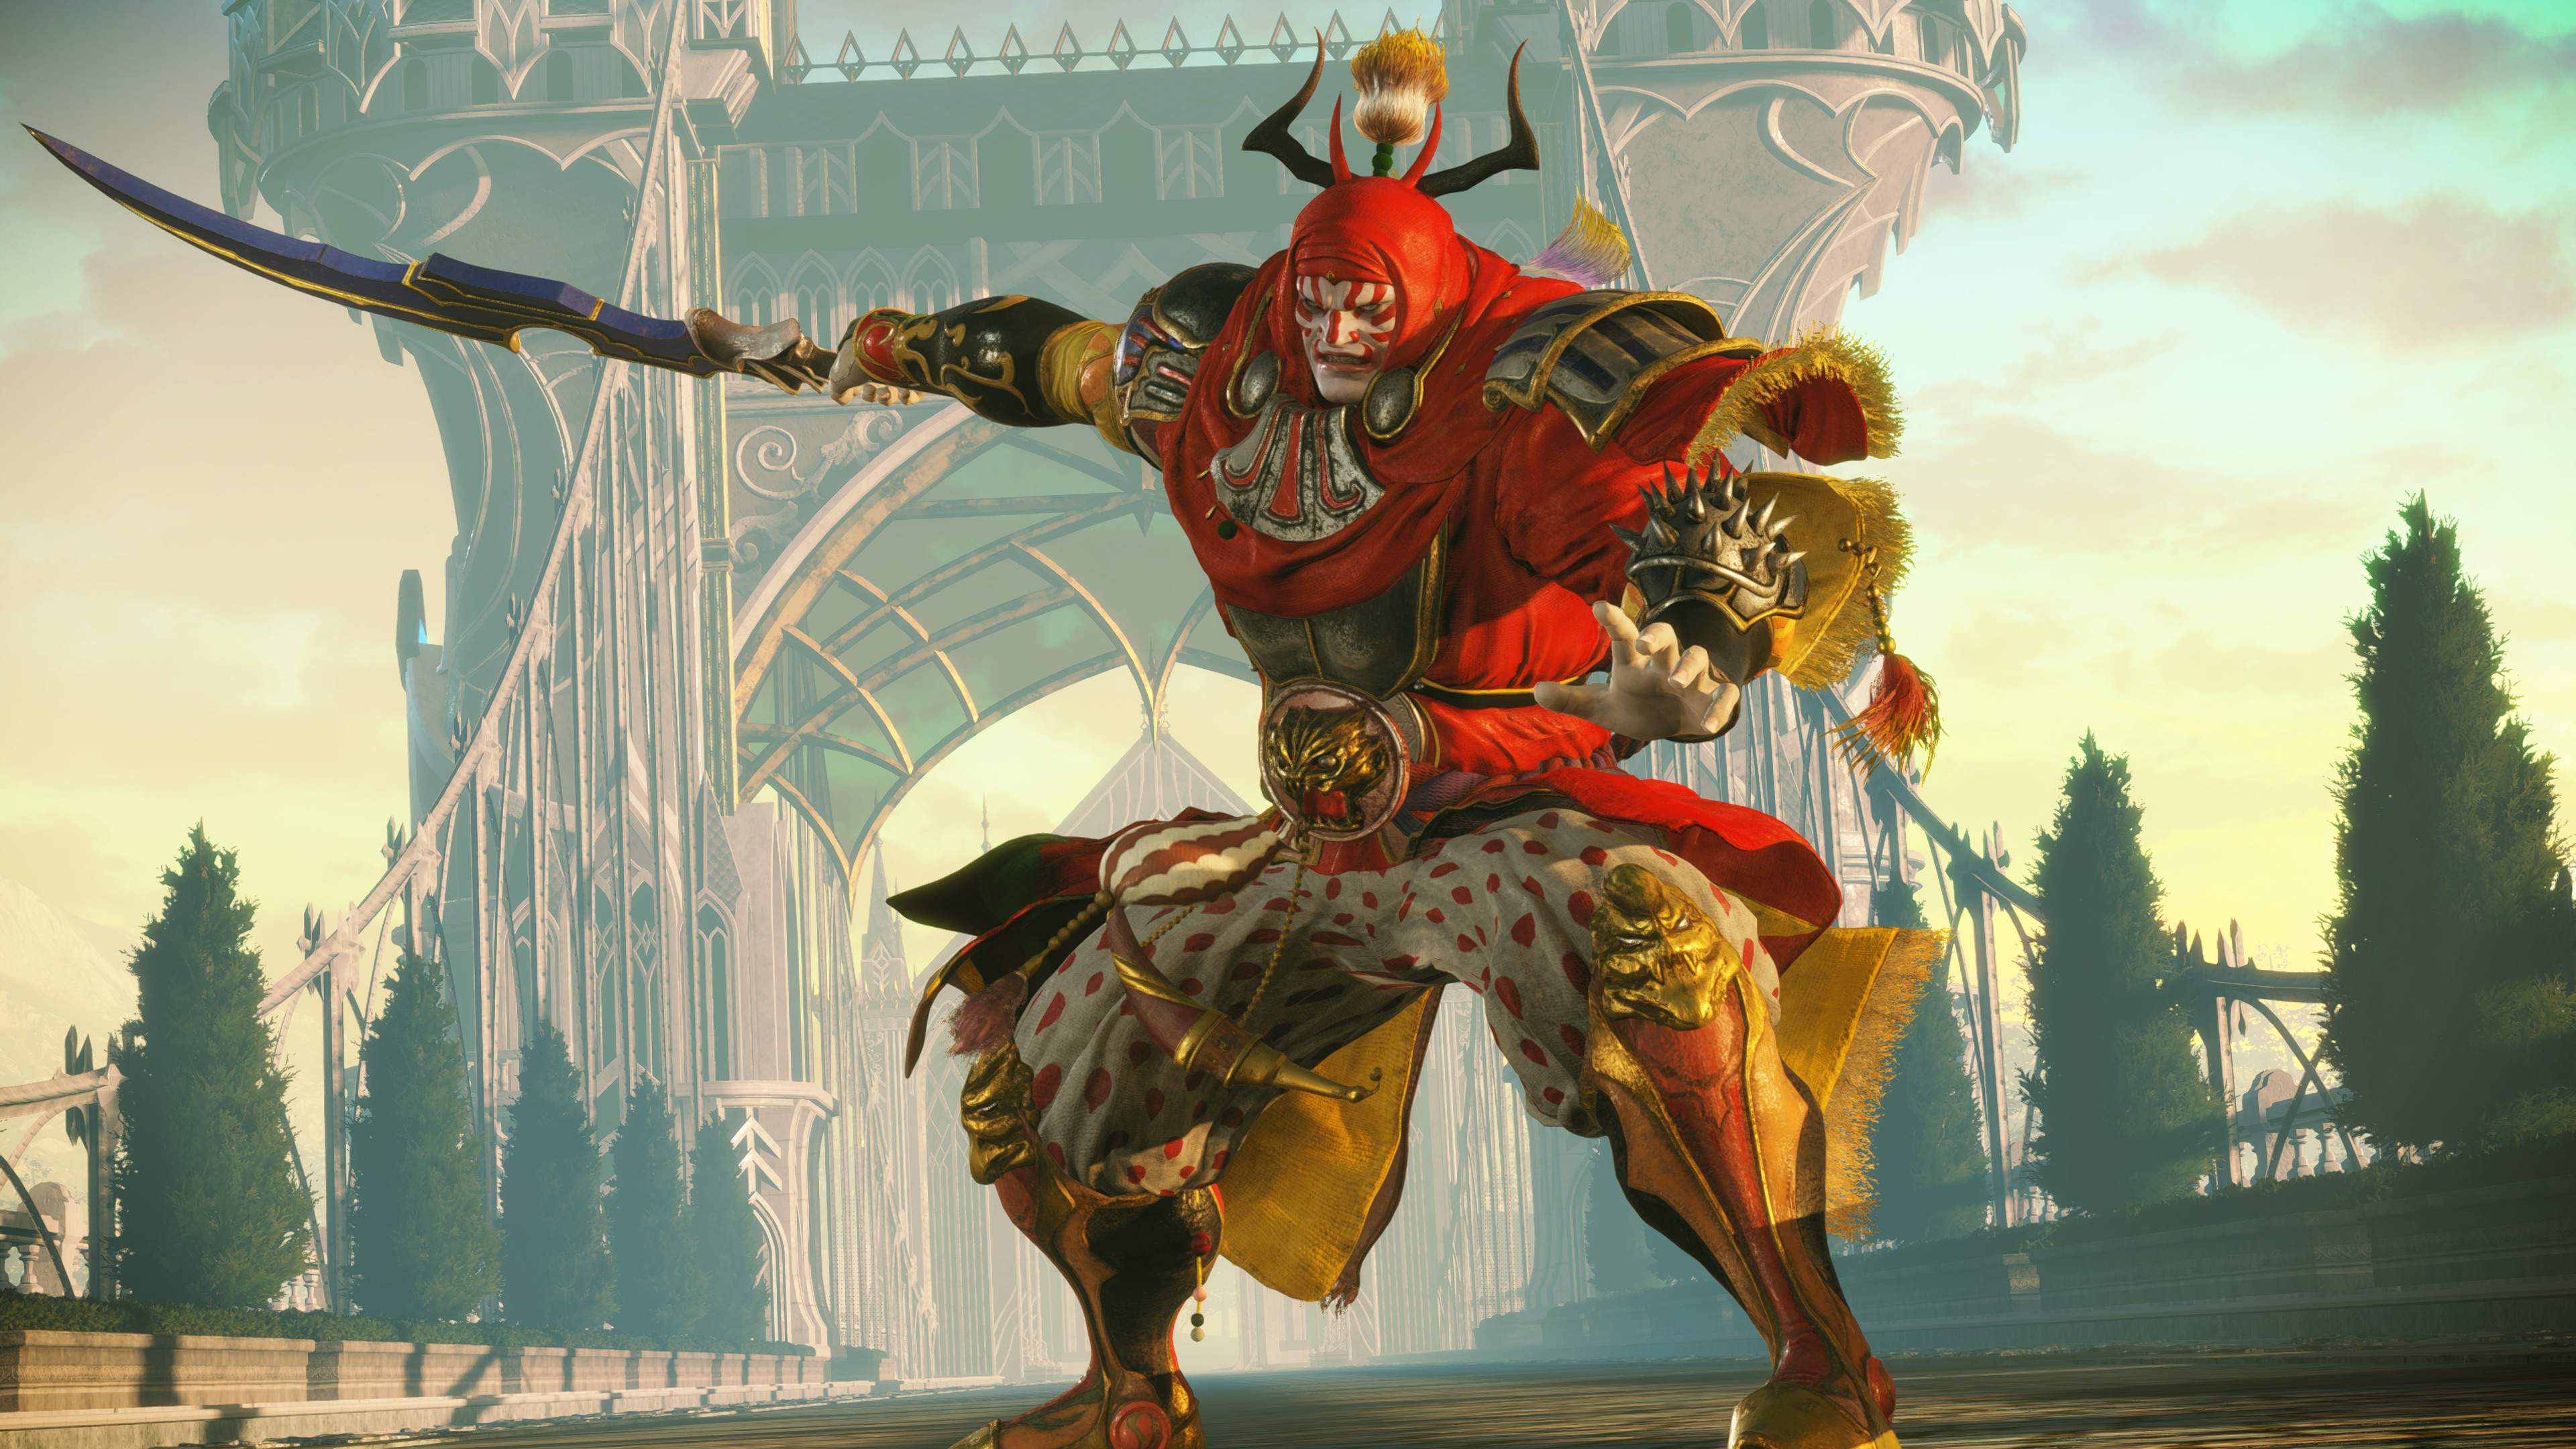 Evolved Gilgamesh (King of Heroes) Showcase 👑, Anime adventures #an